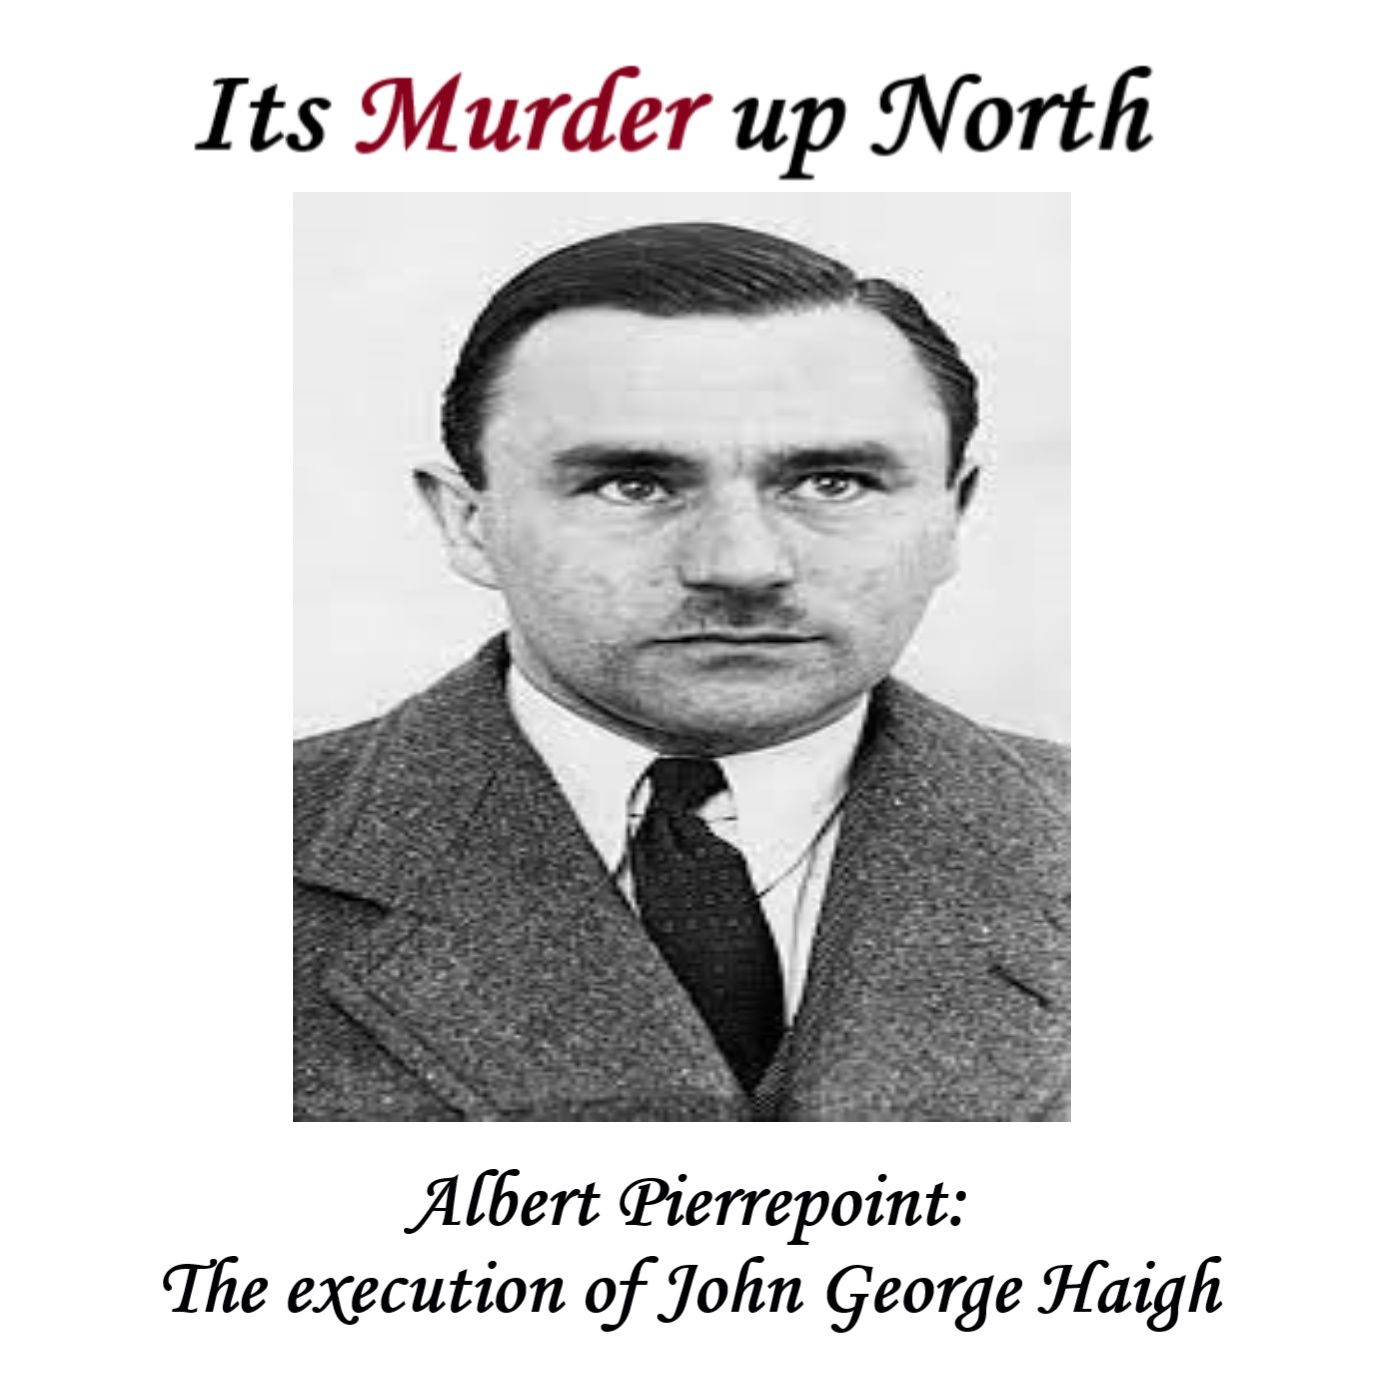 Albert Pierrepoint: John George Haigh